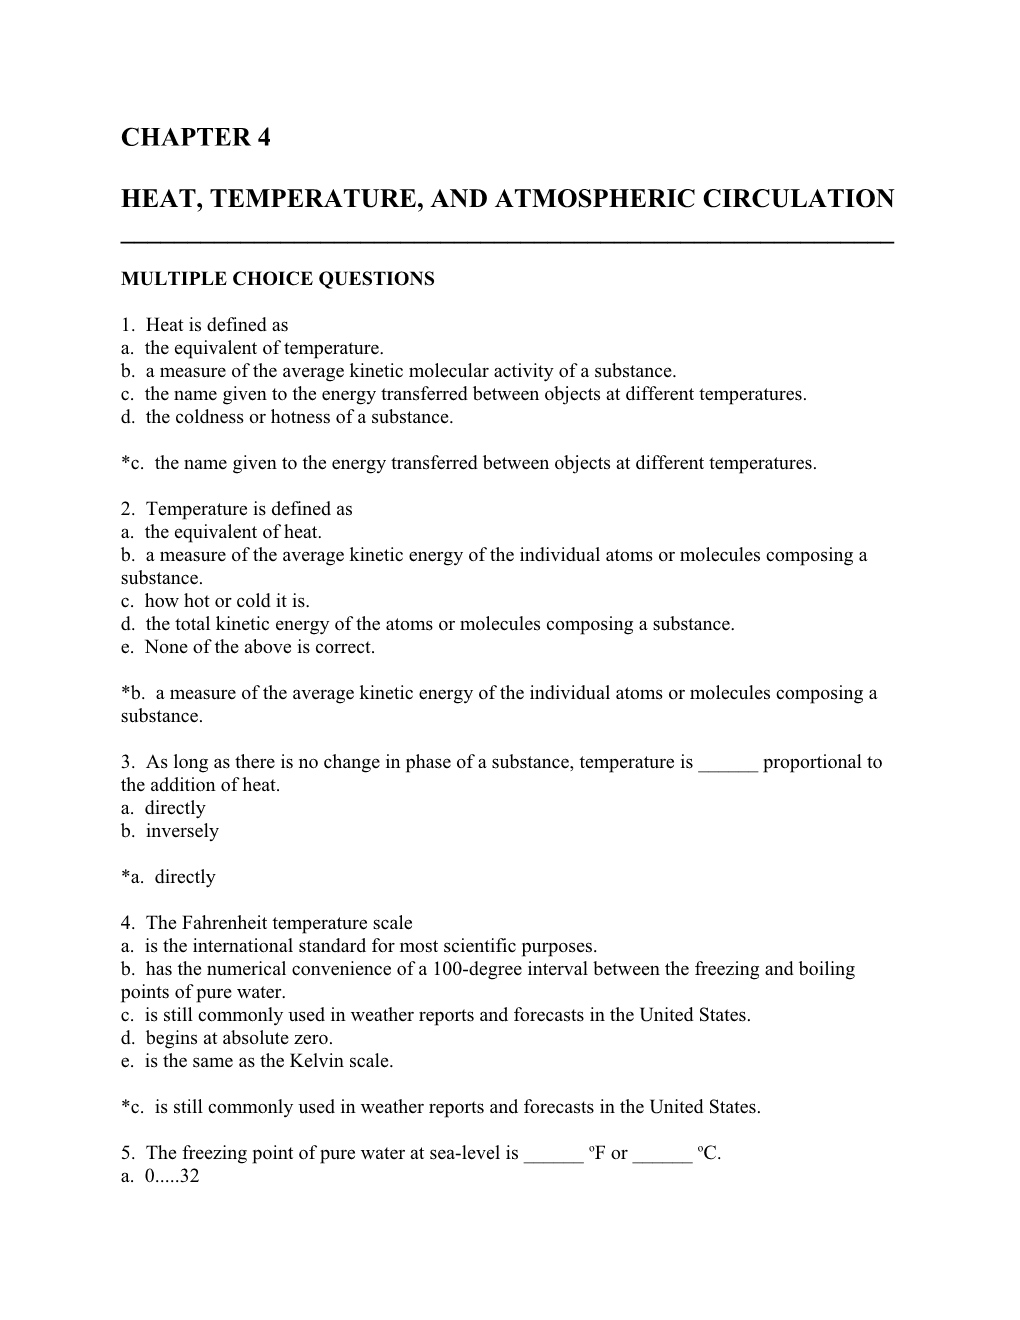 Heat, Temperature, and Atmospheric Circulation